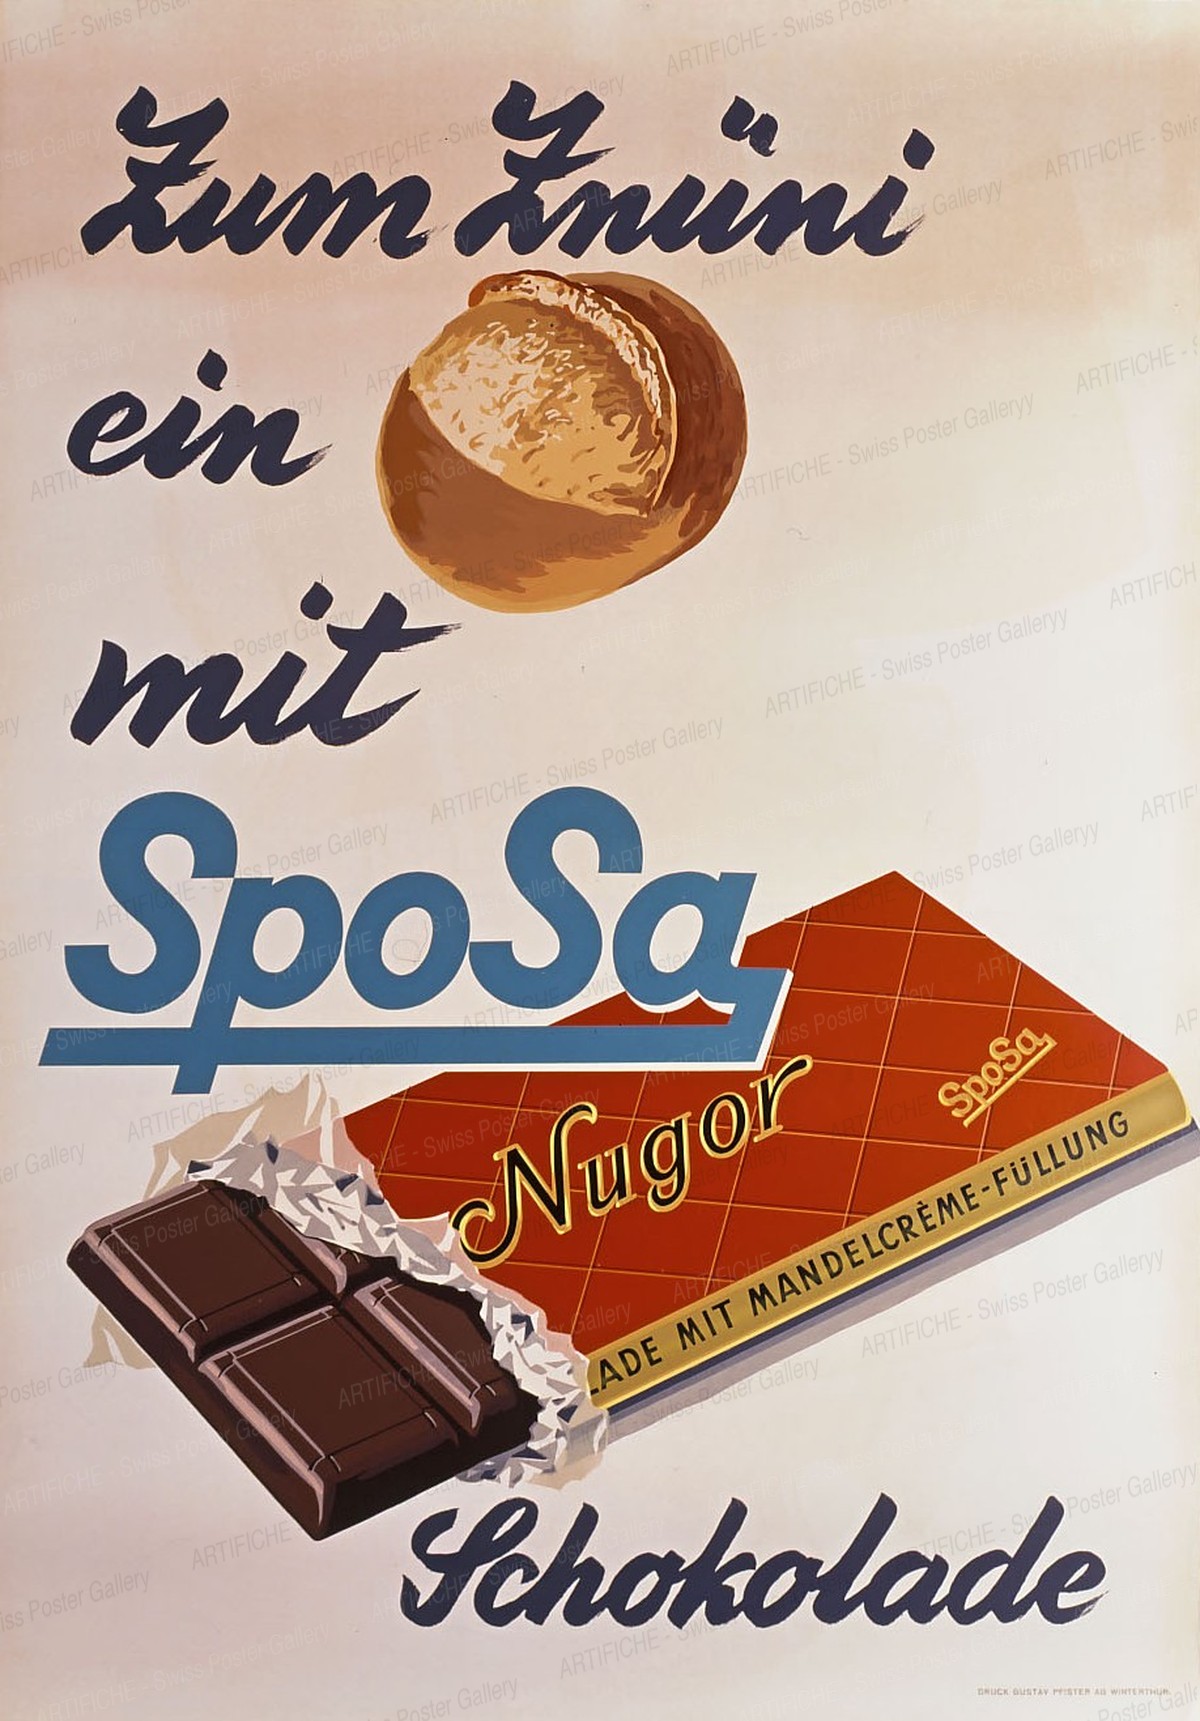 SpoSa Nugor Chocolate, Artist unknown